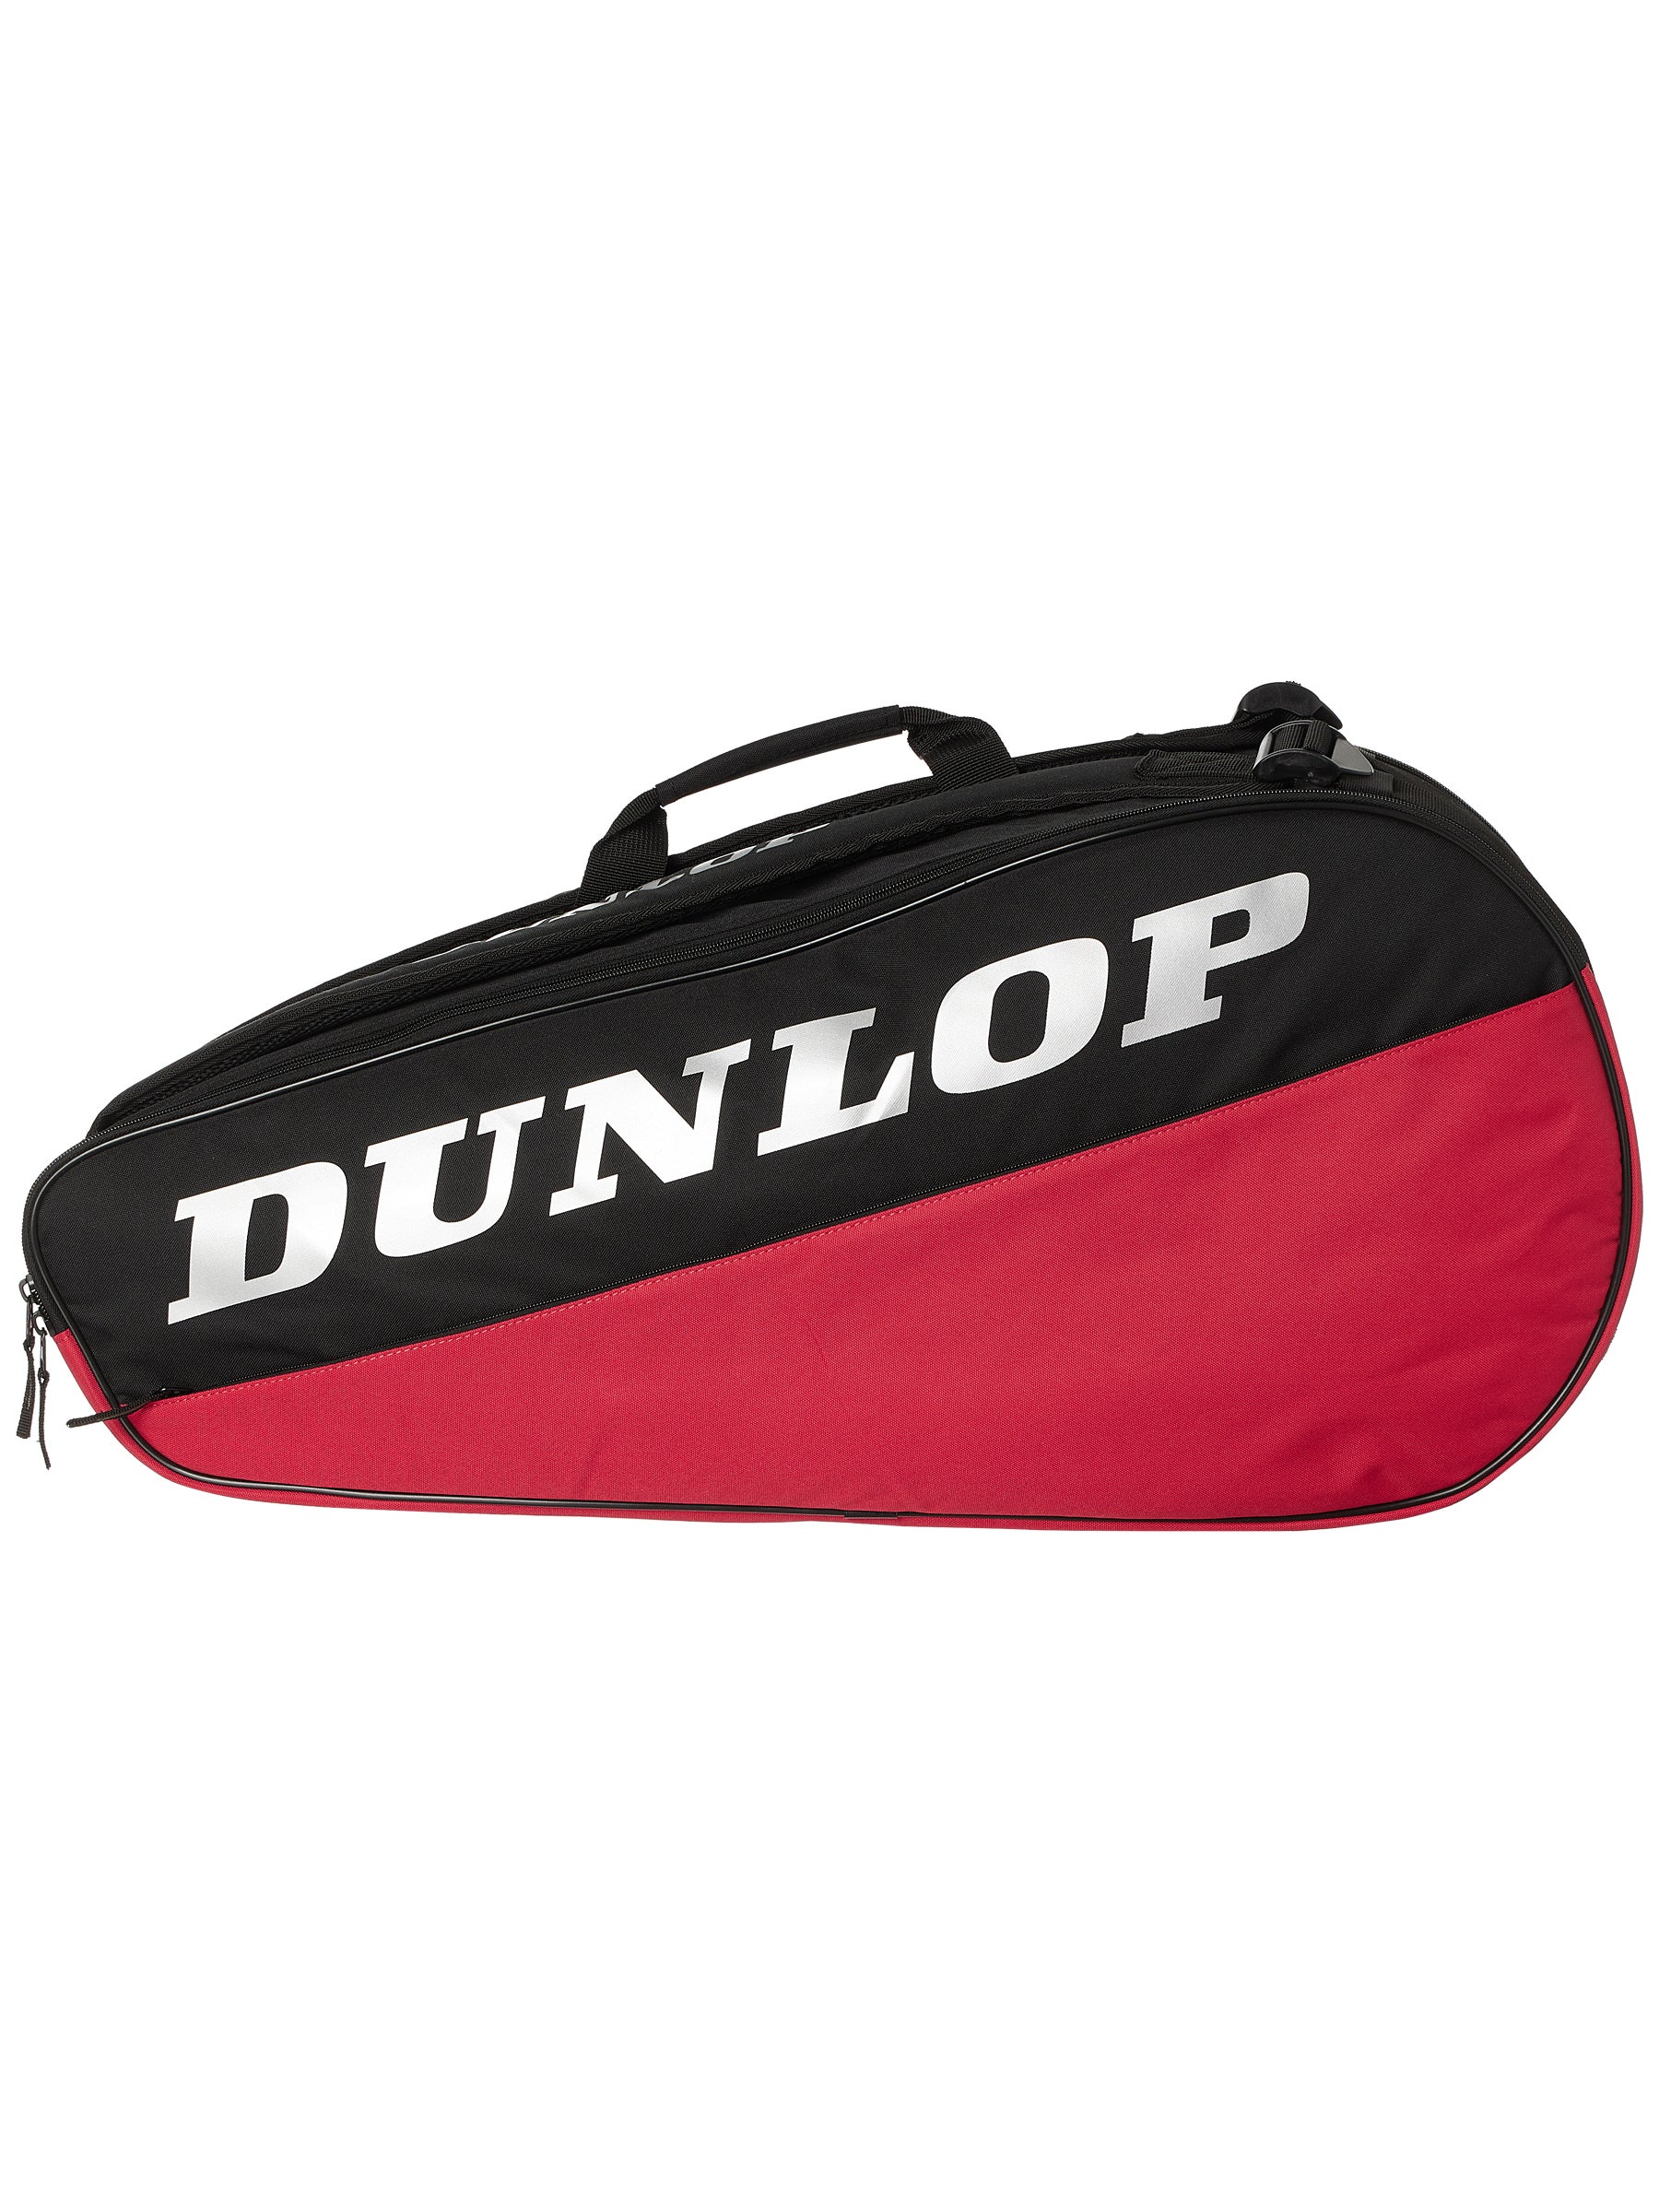 Dunlop Club 2.0 3 Racket Bag